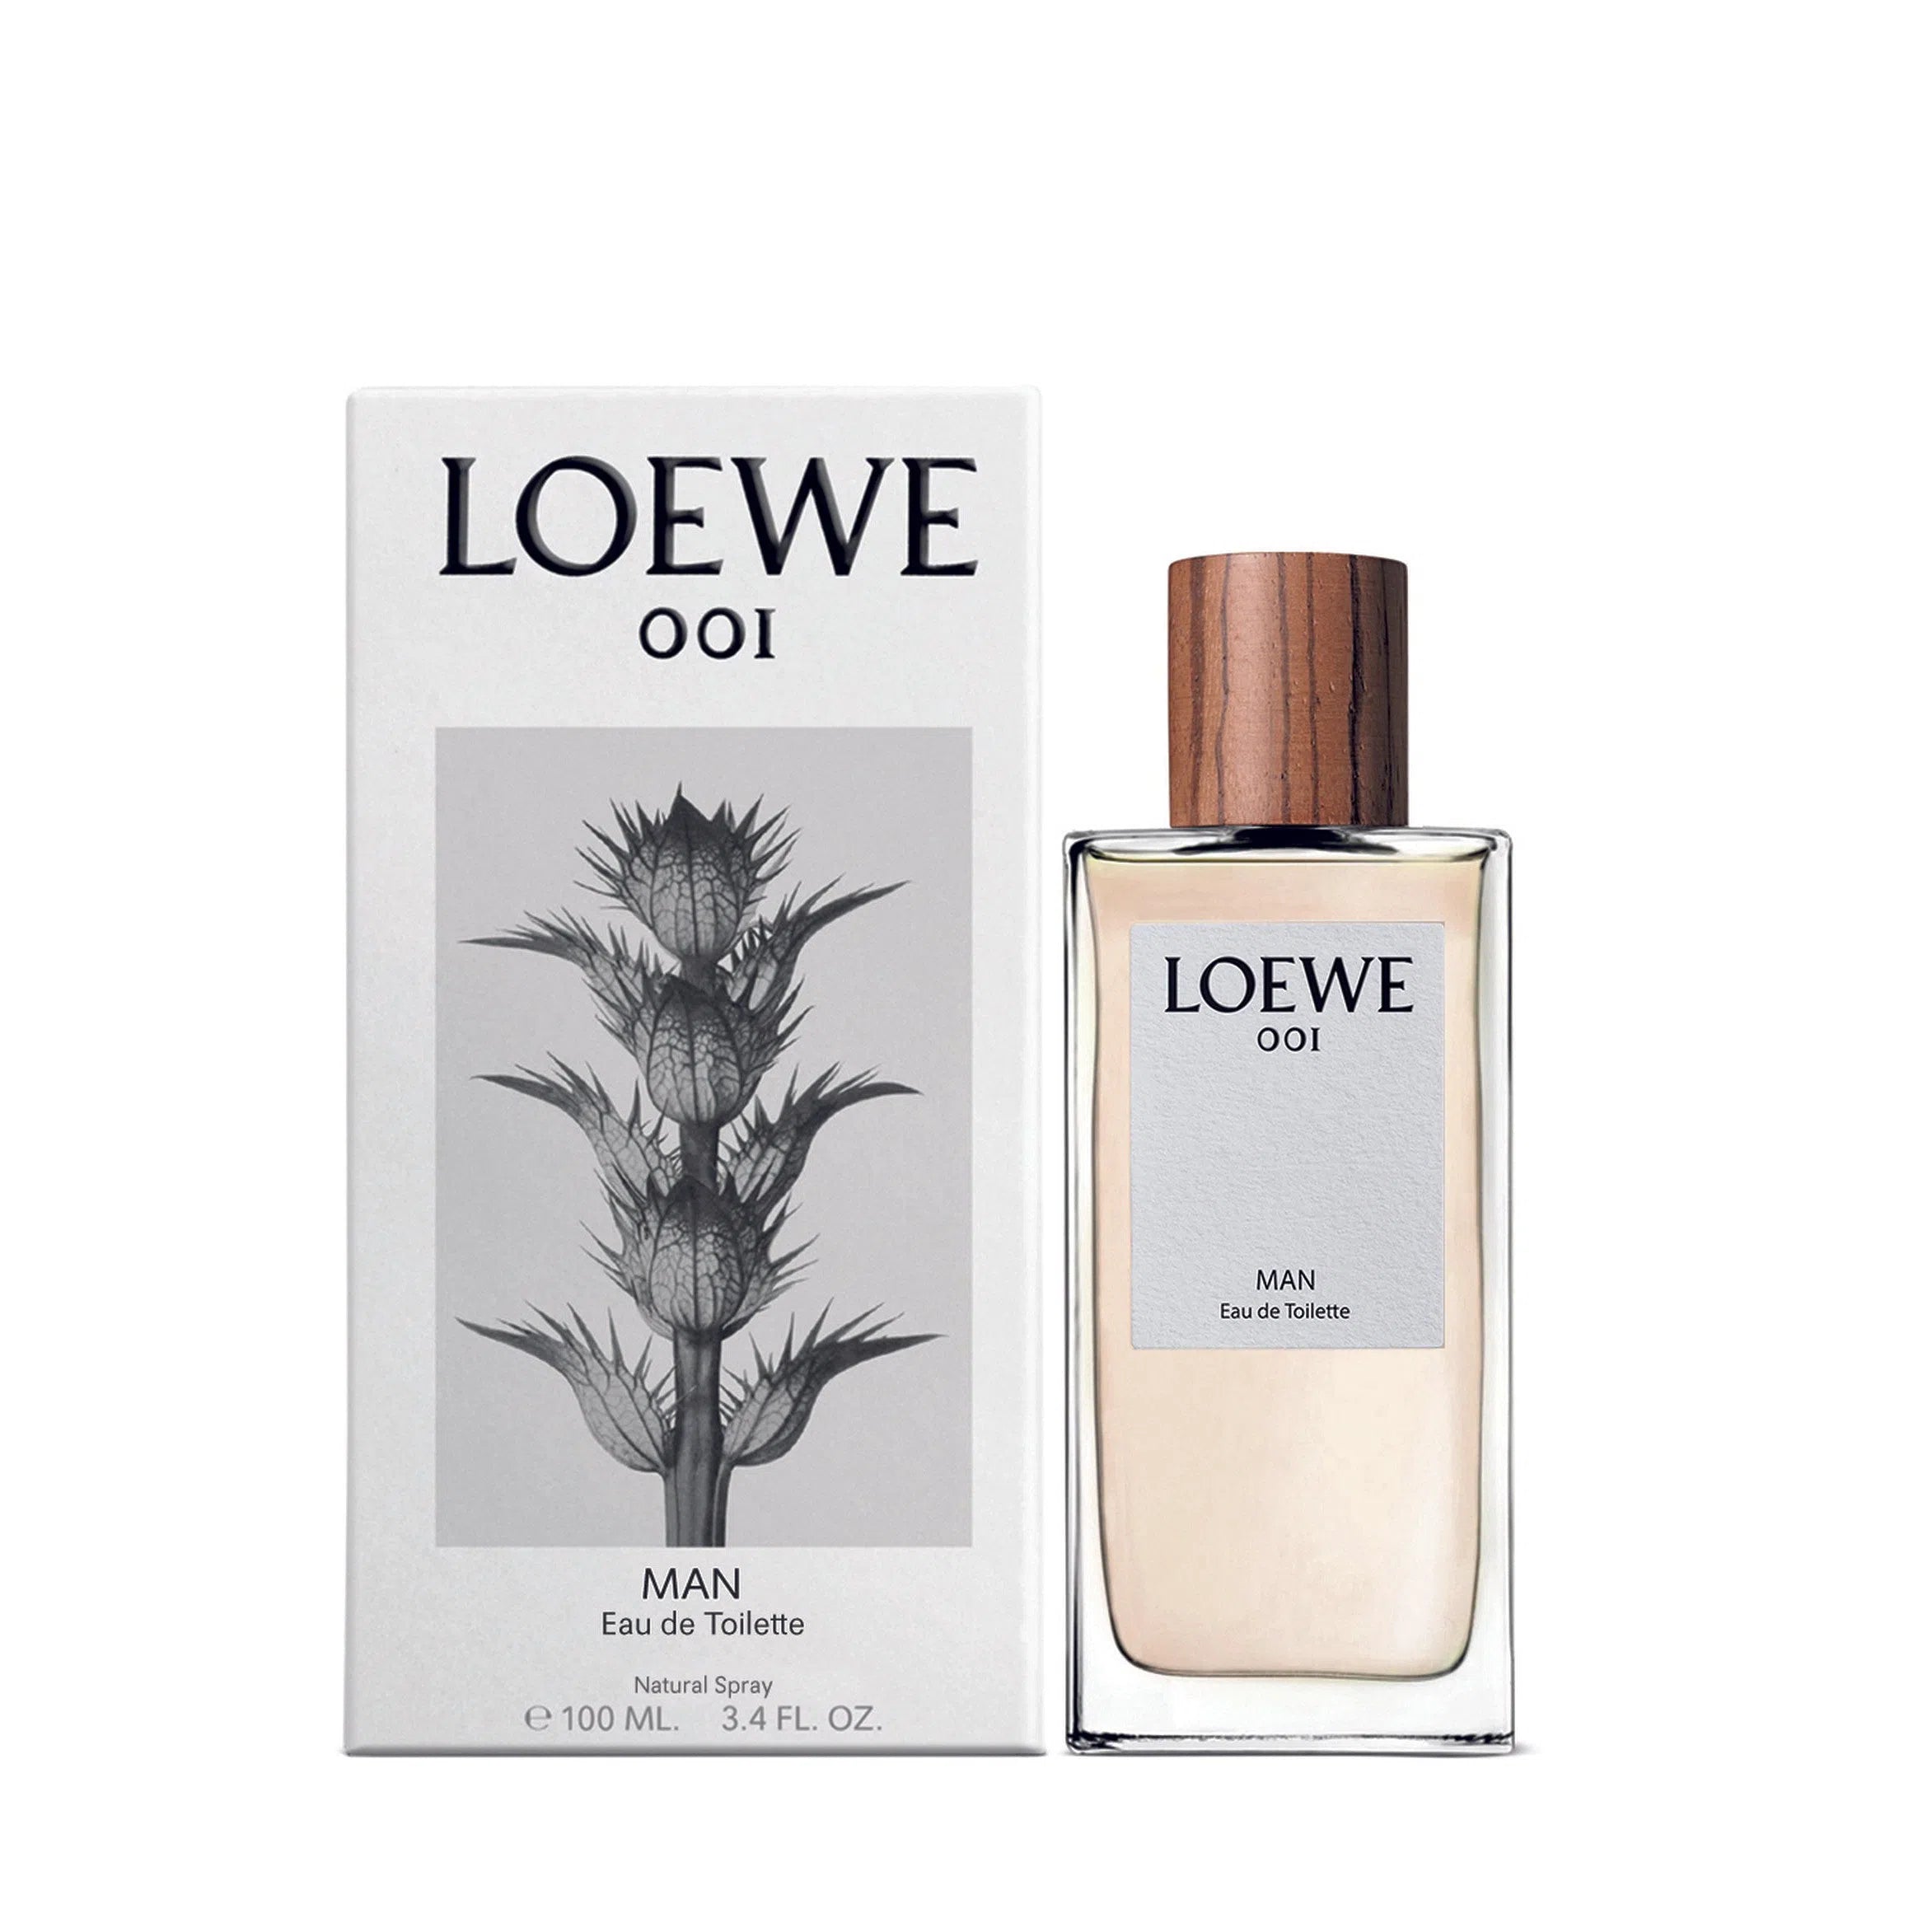 Perfume Loewe 001 EDT (M) / 75 ml - 8426017072144- 1 - Prive Perfumes Honduras